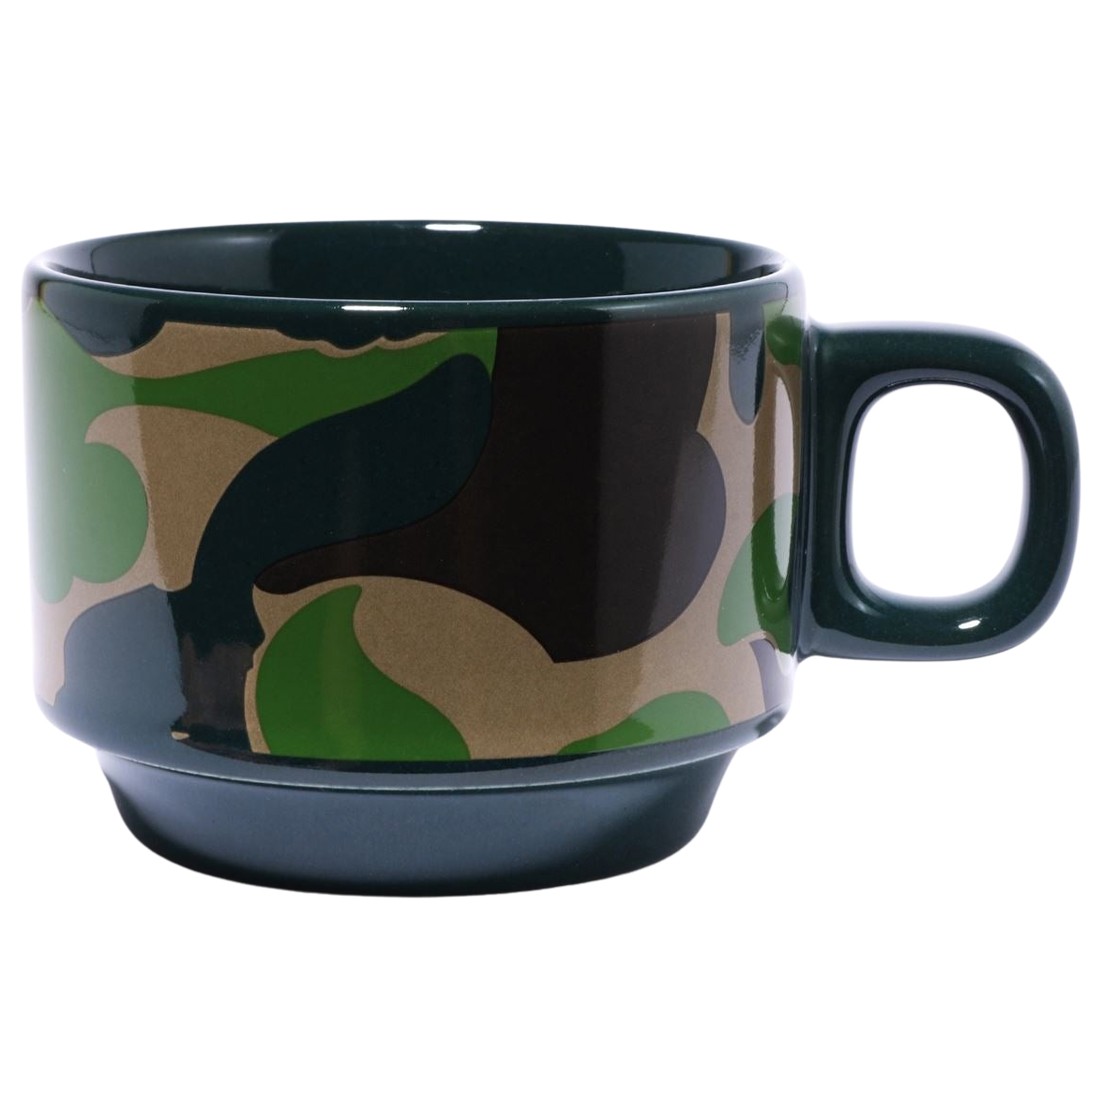 RealTree Camo Mug 32 oz - Mugs N Coffee